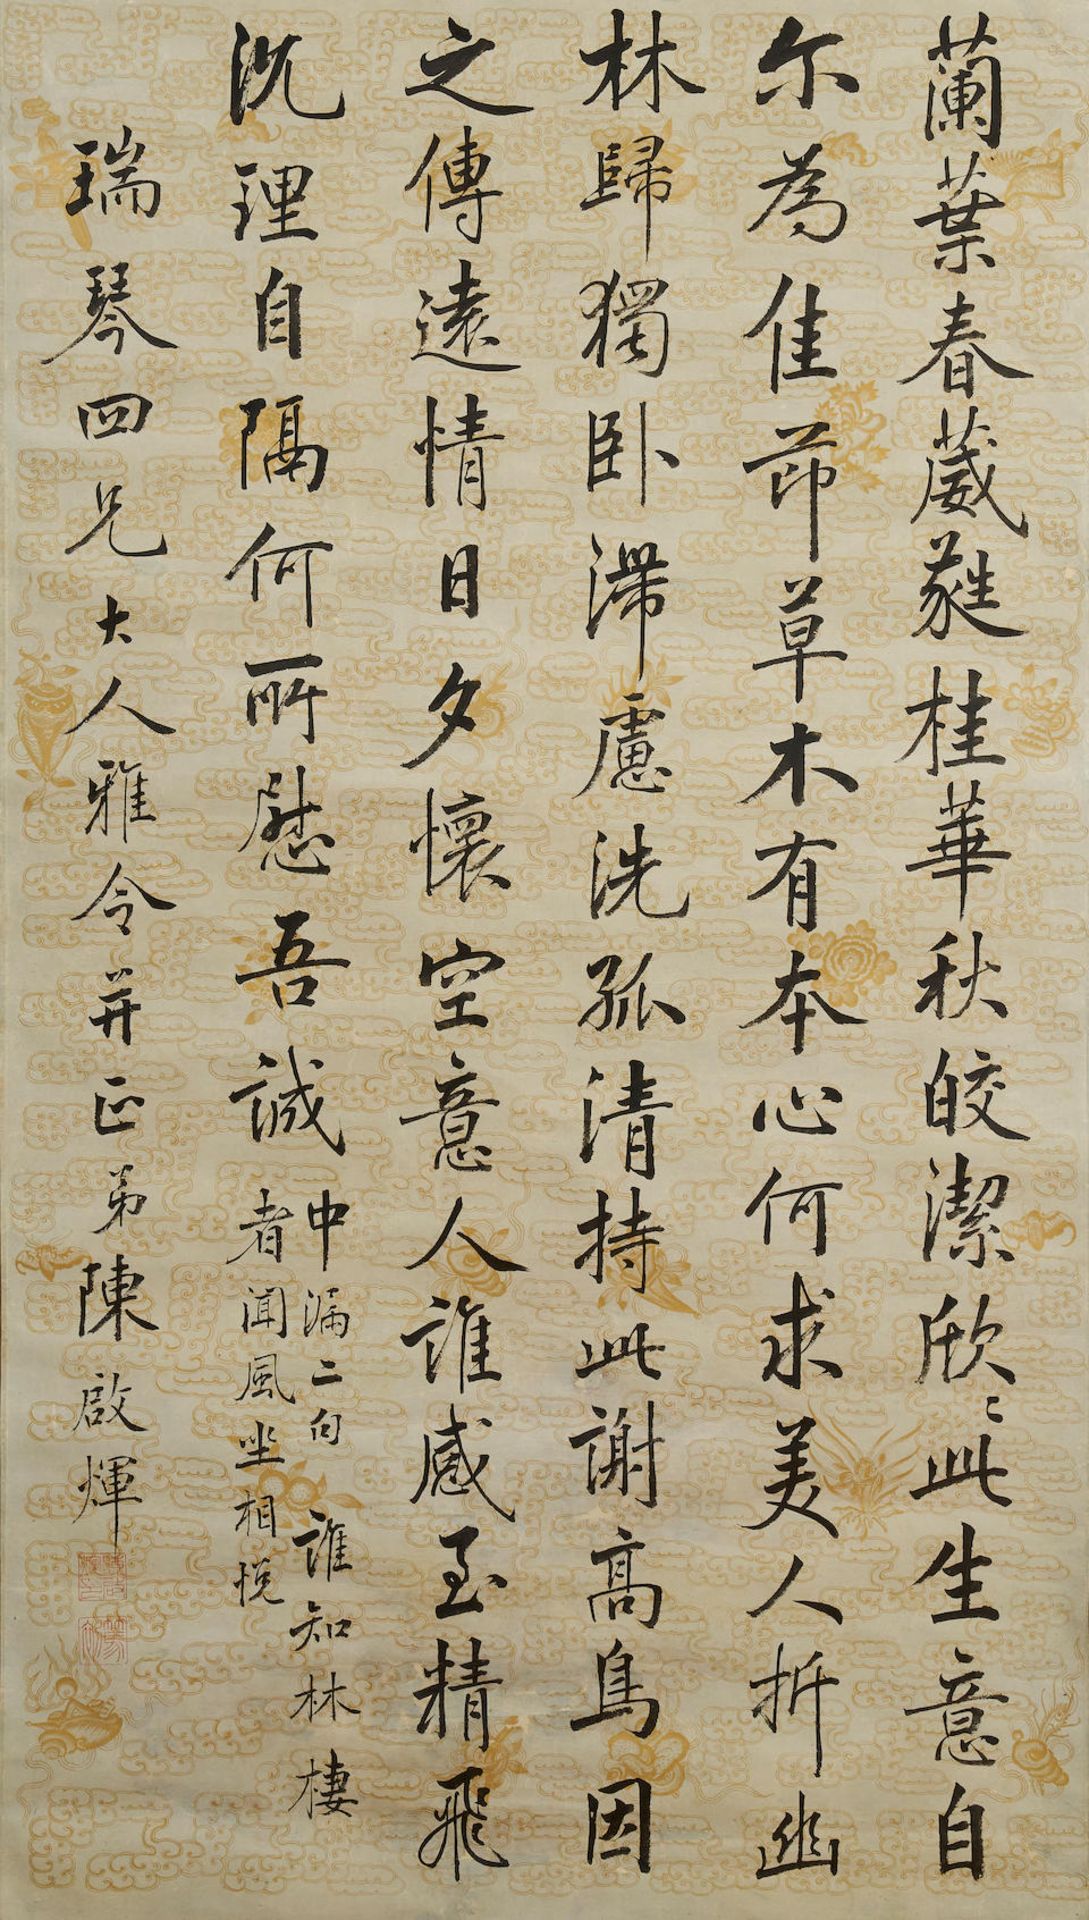 Chen Qihui (19th/20th century) Calligraphy in Regular style